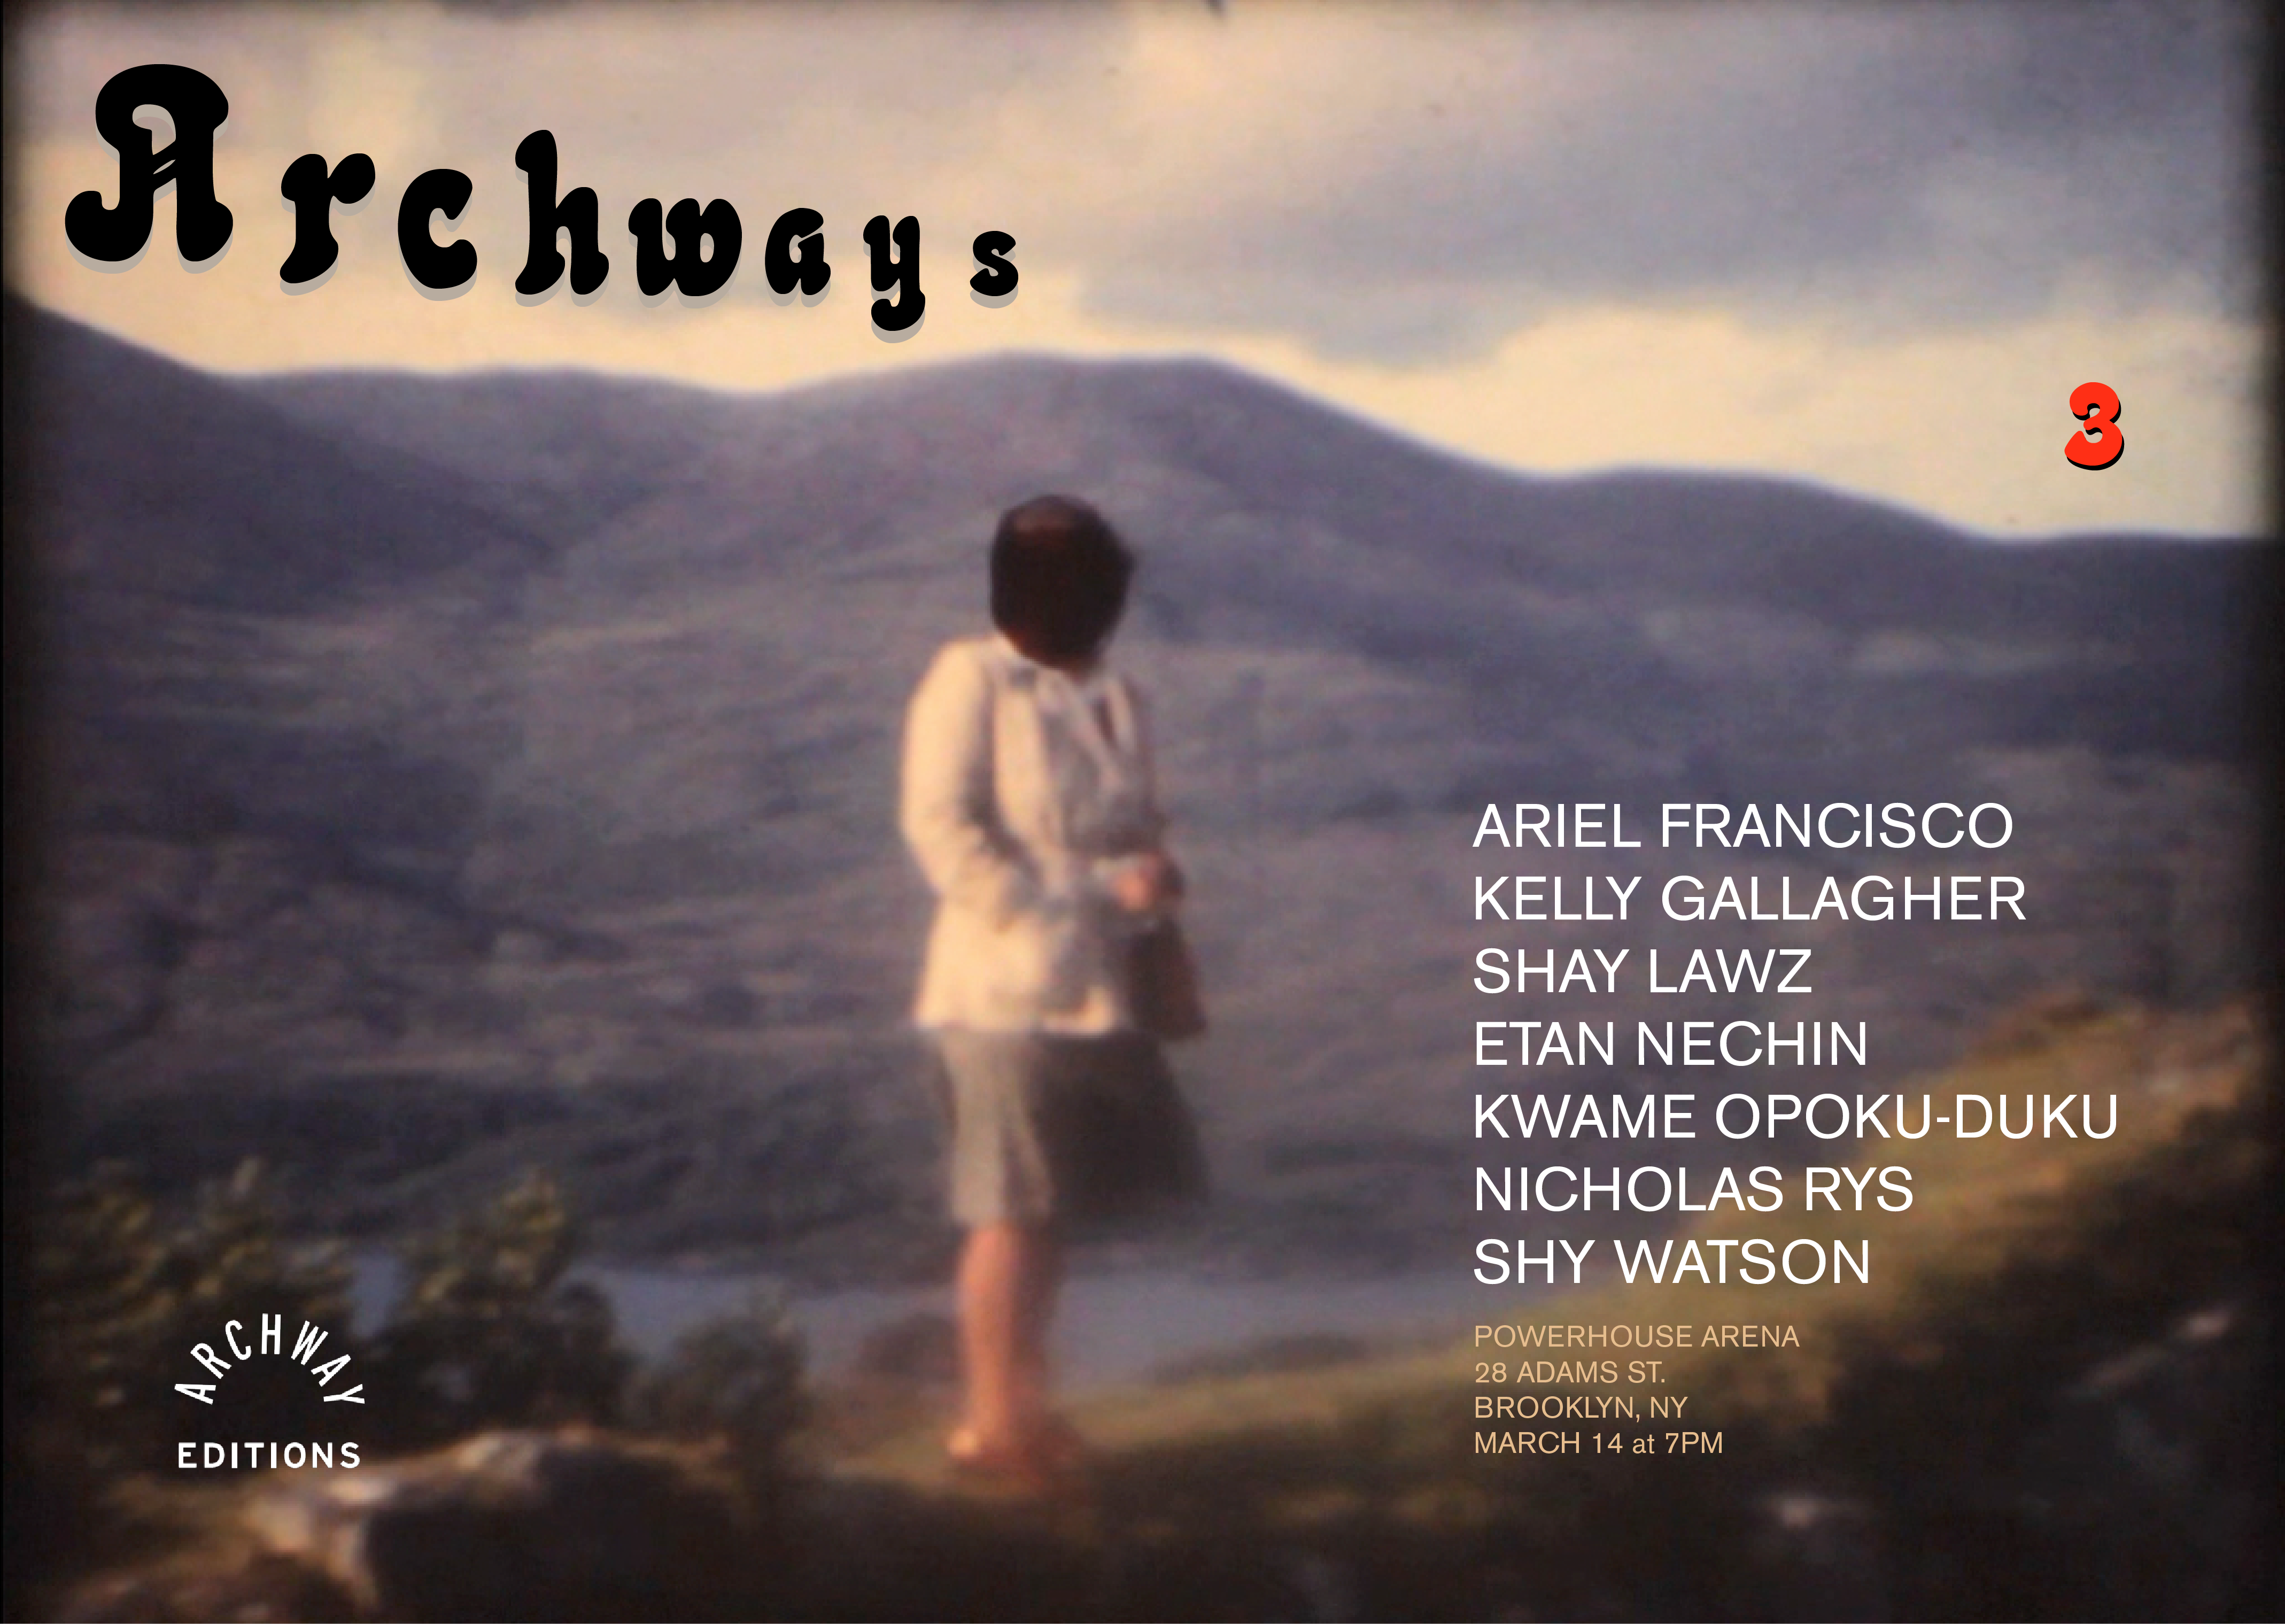 Archways 3 featuring Ariel Francisco, Kelly Gallagher, Shay Lawz, Etan Nechin, Kwame Opoku-Duku, Nicholas Rys and Shy Watson (POSTPONED)